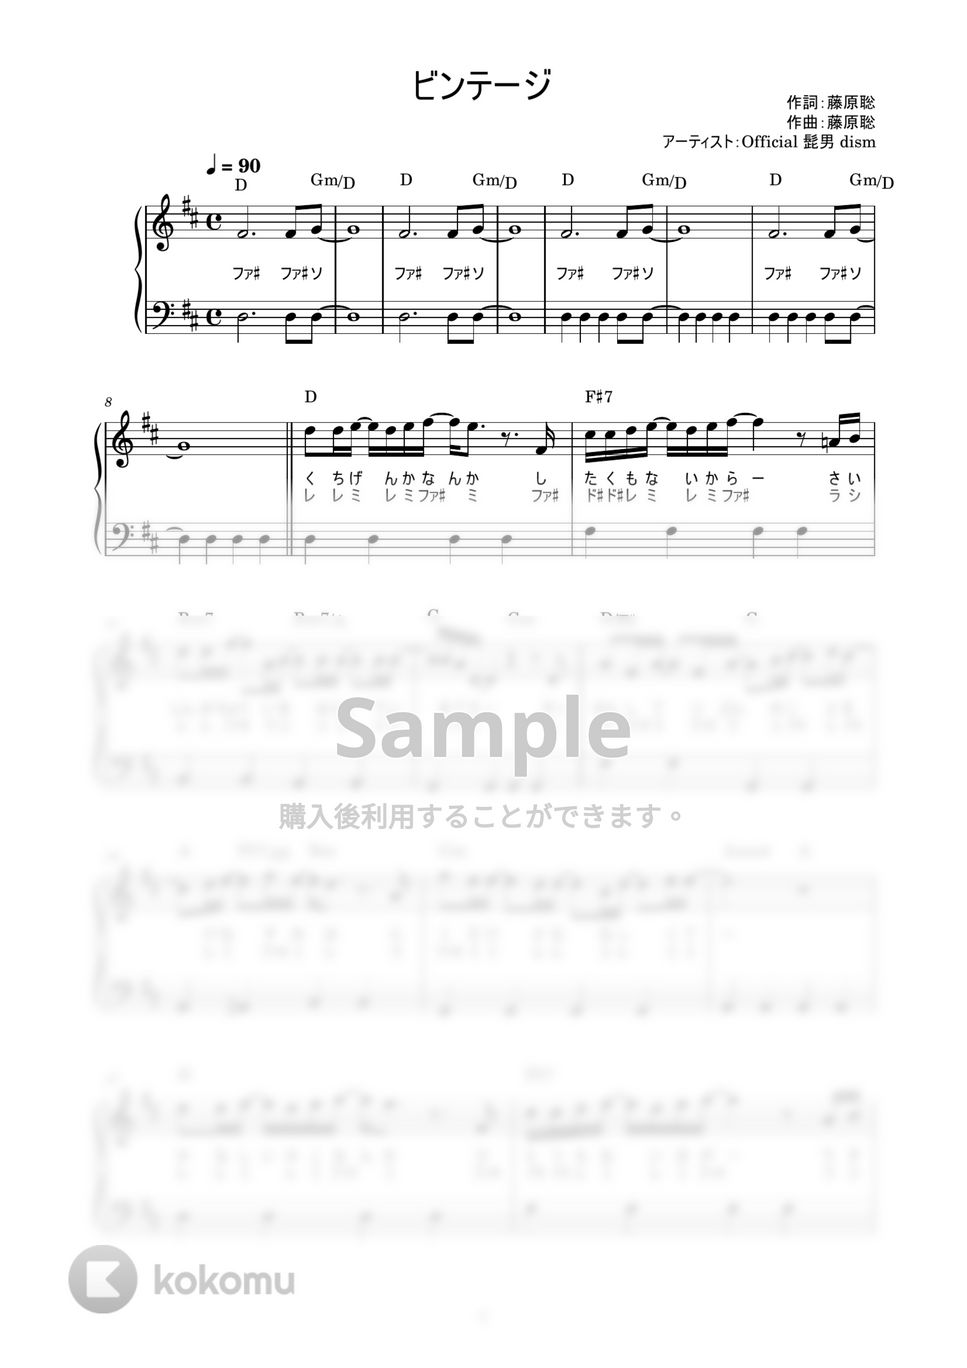 Official髭男dism - ビンテージ (かんたん / 歌詞付き / ドレミ付き / 初心者) by piano.tokyo